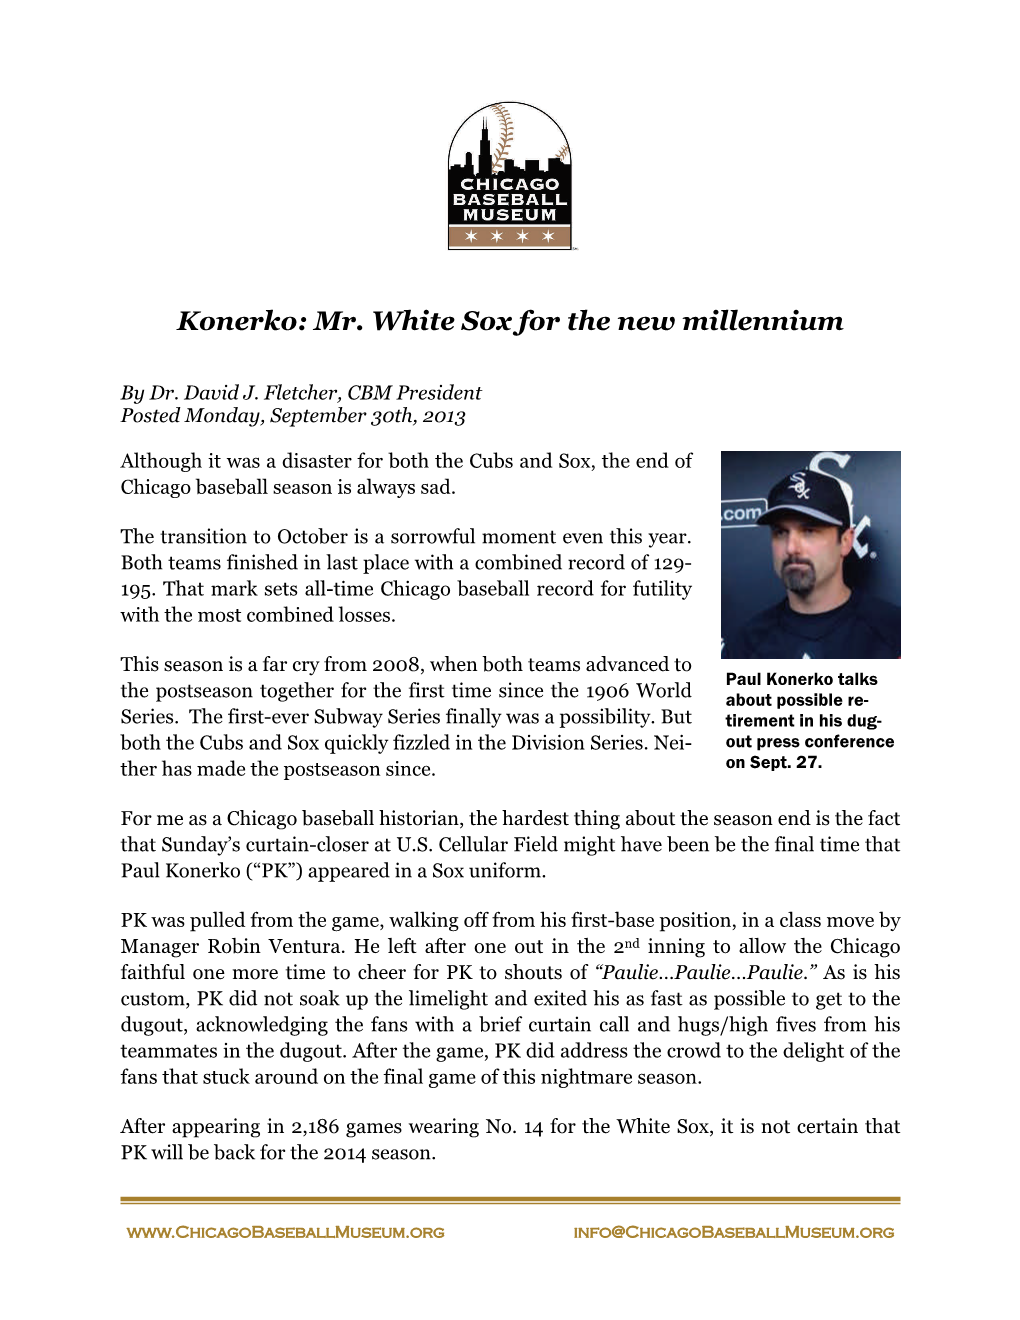 Konerko: Mr. White Sox for the New Millennium